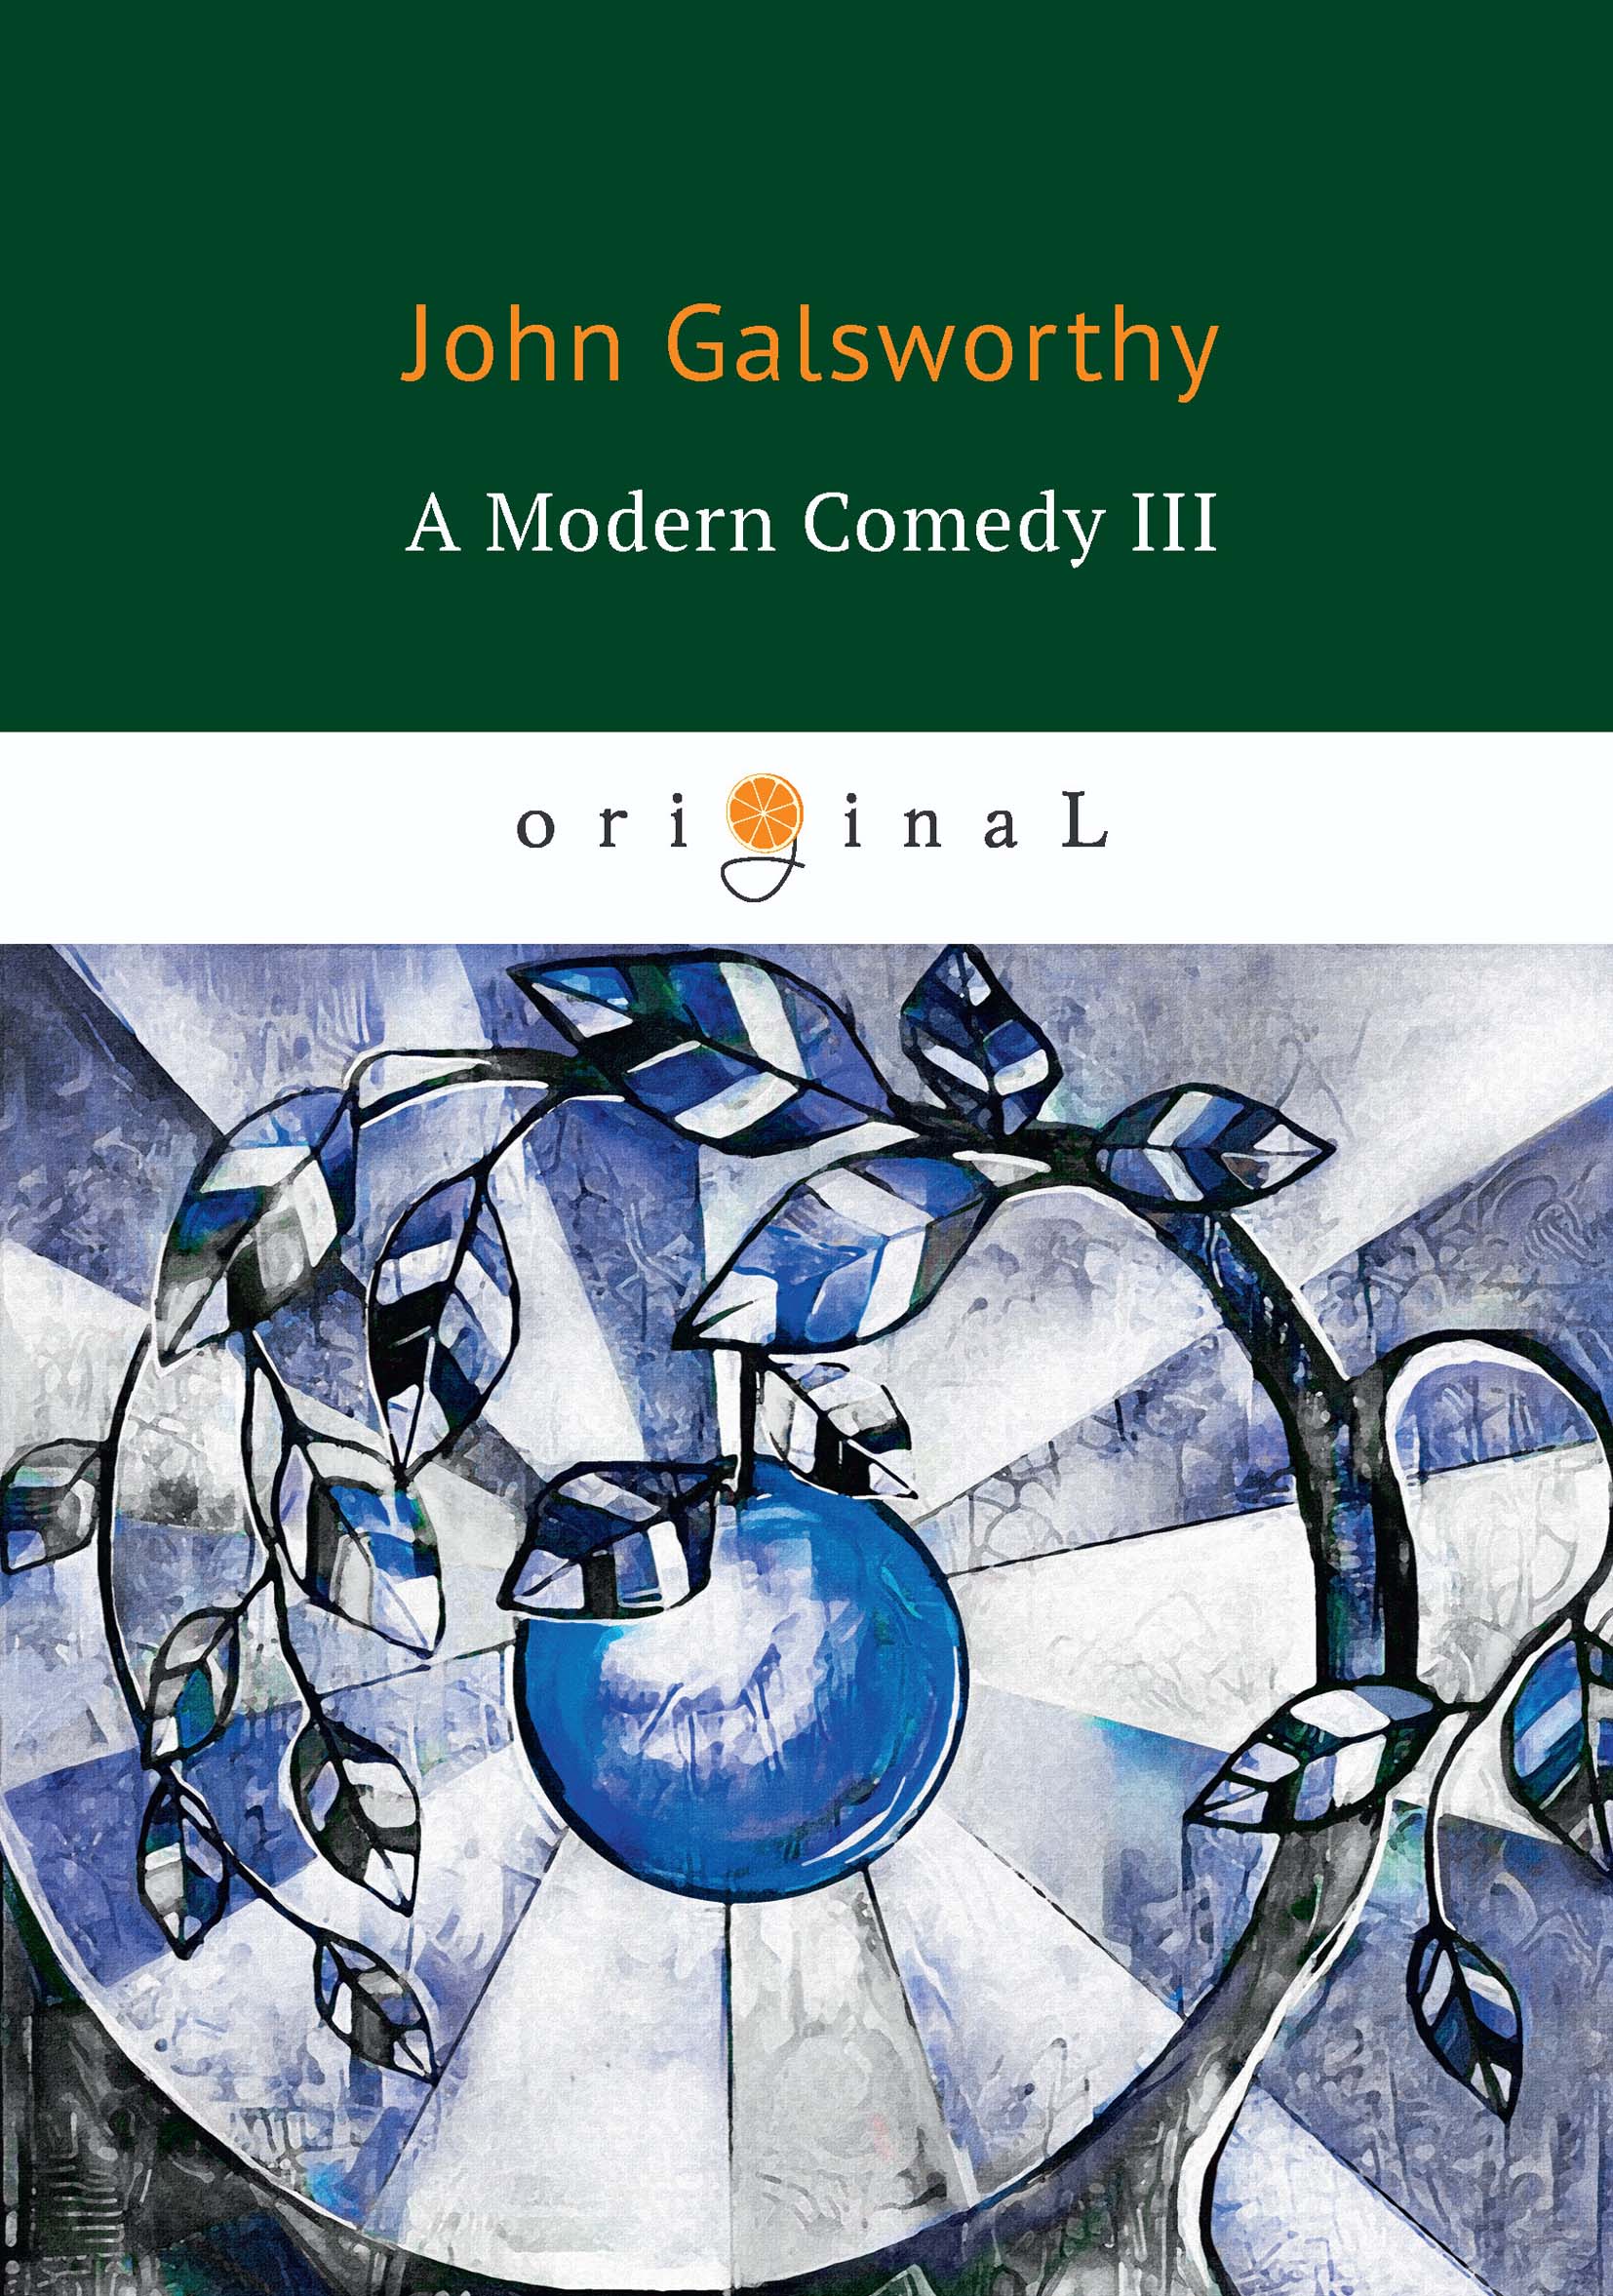 A Modern Comedy III. John Galsworthy